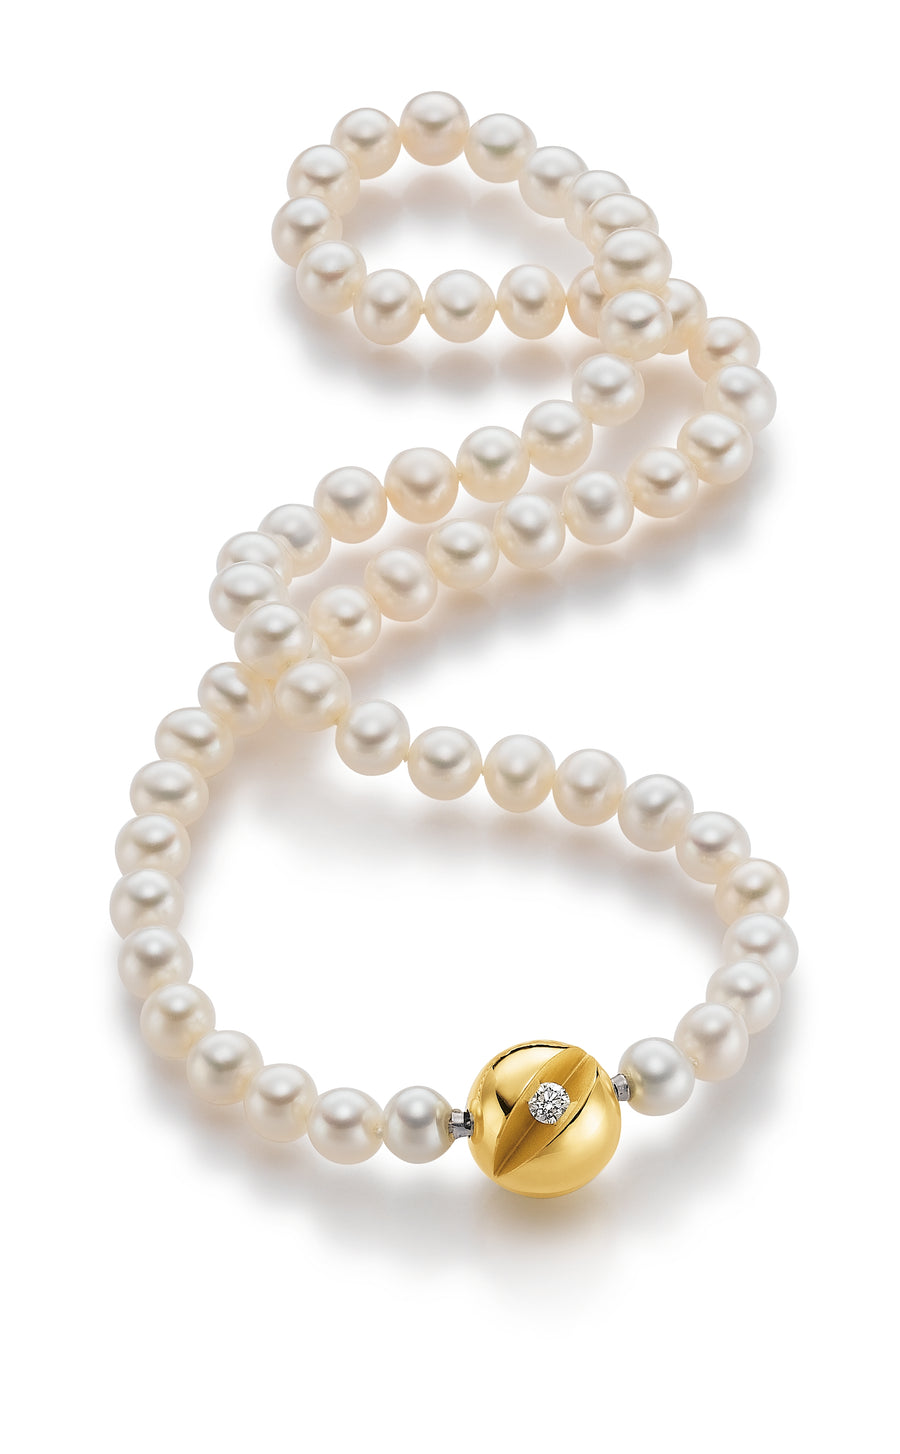 Catherine Jones Pearl ring 18ct white gold Diamond-studded petals